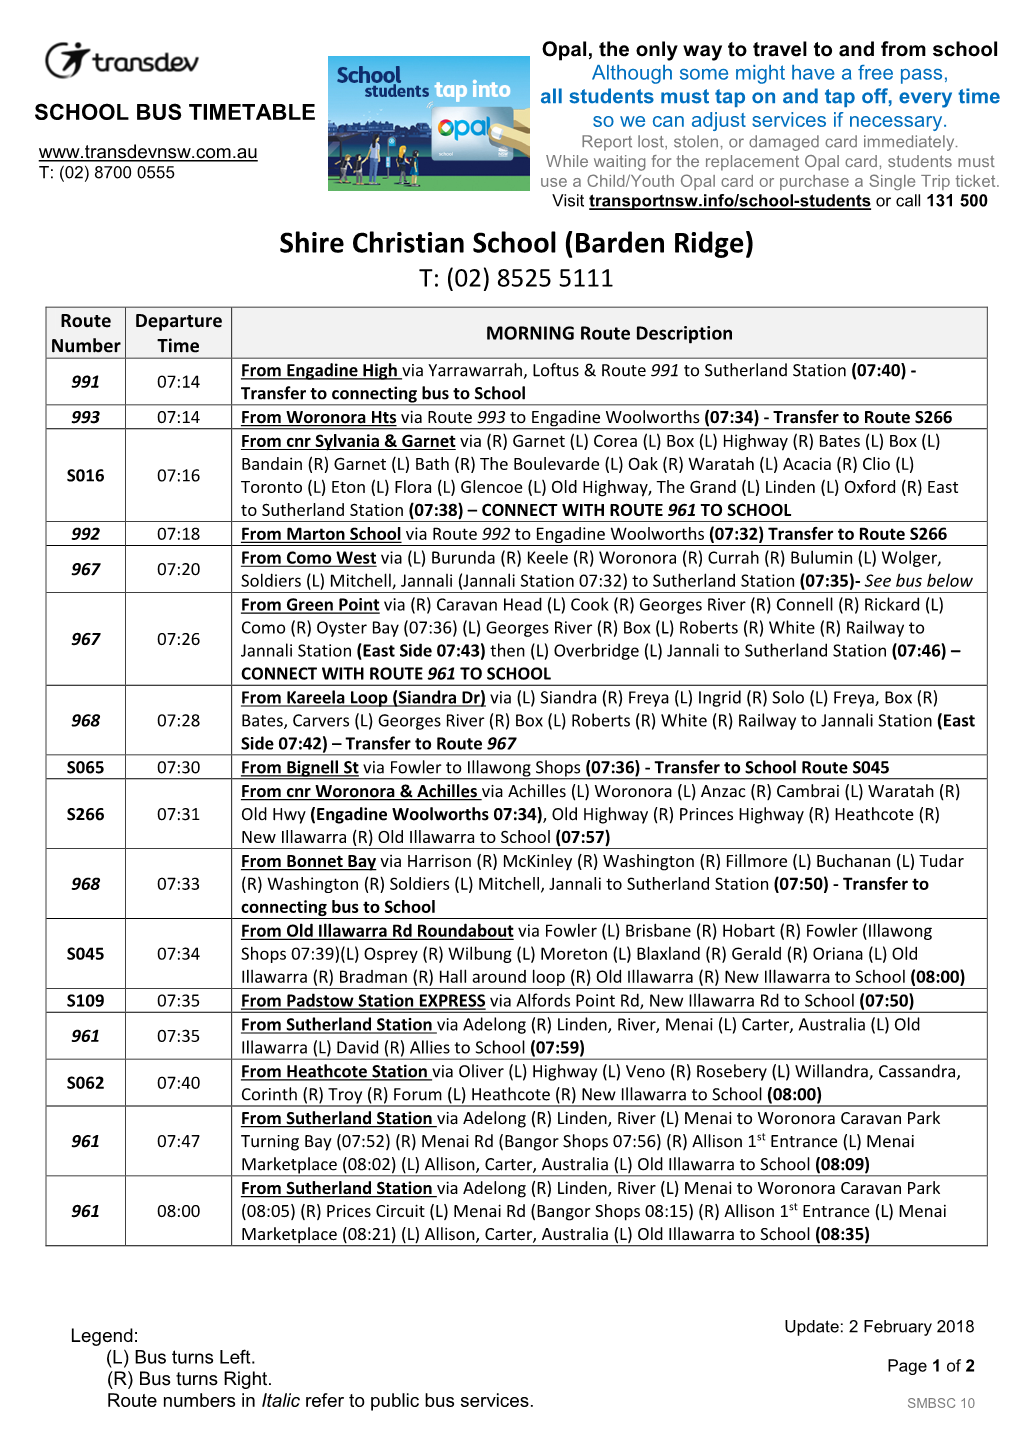 Shire Christian School (Barden Ridge) T: (02) 8525 5111